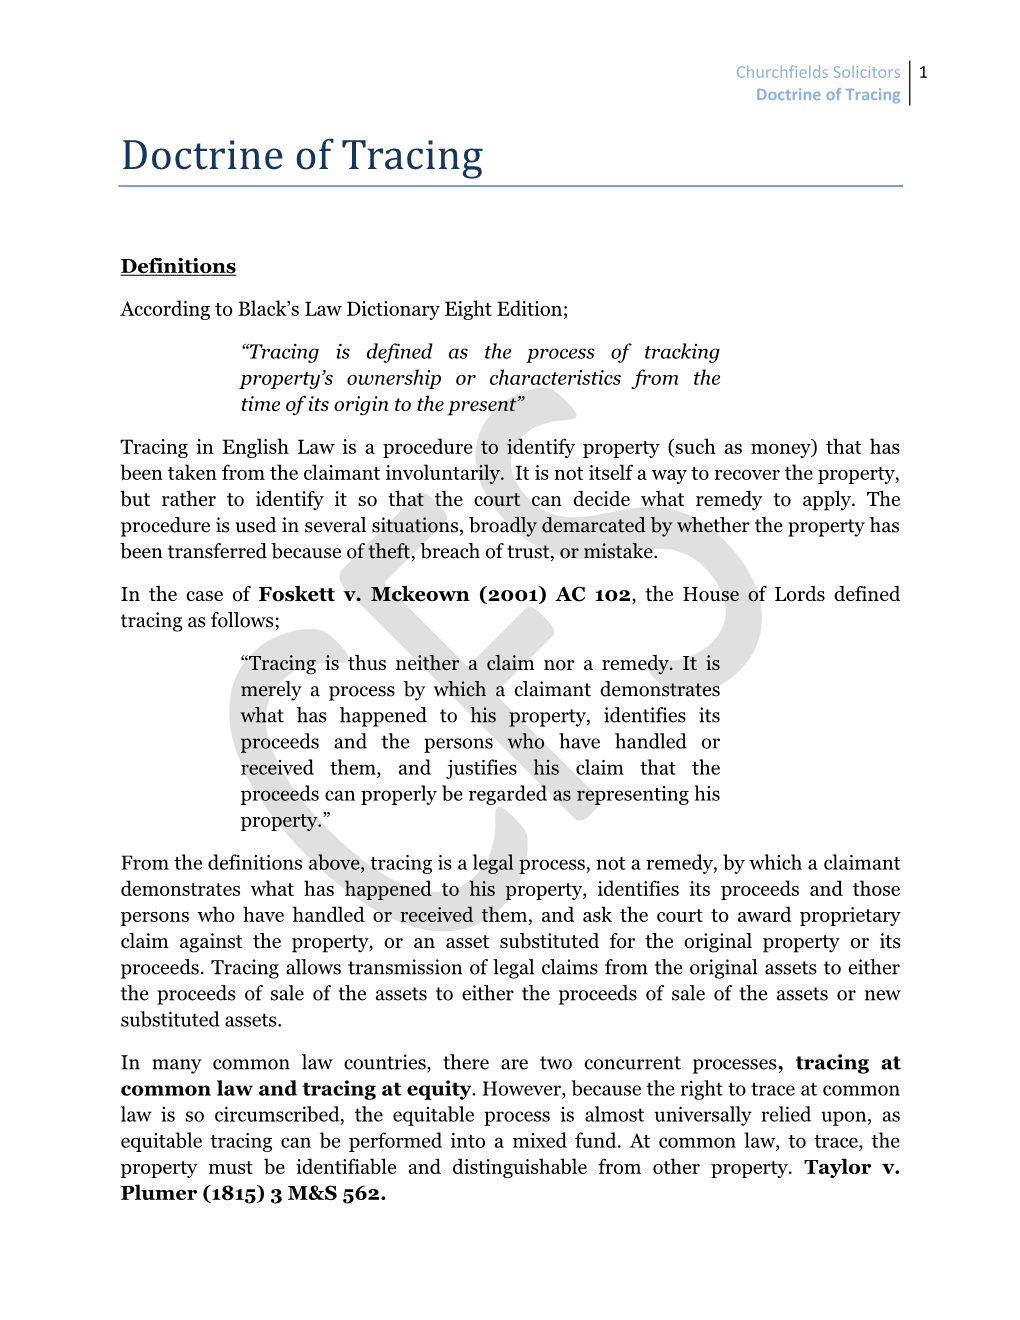 Doctrine of Tracing